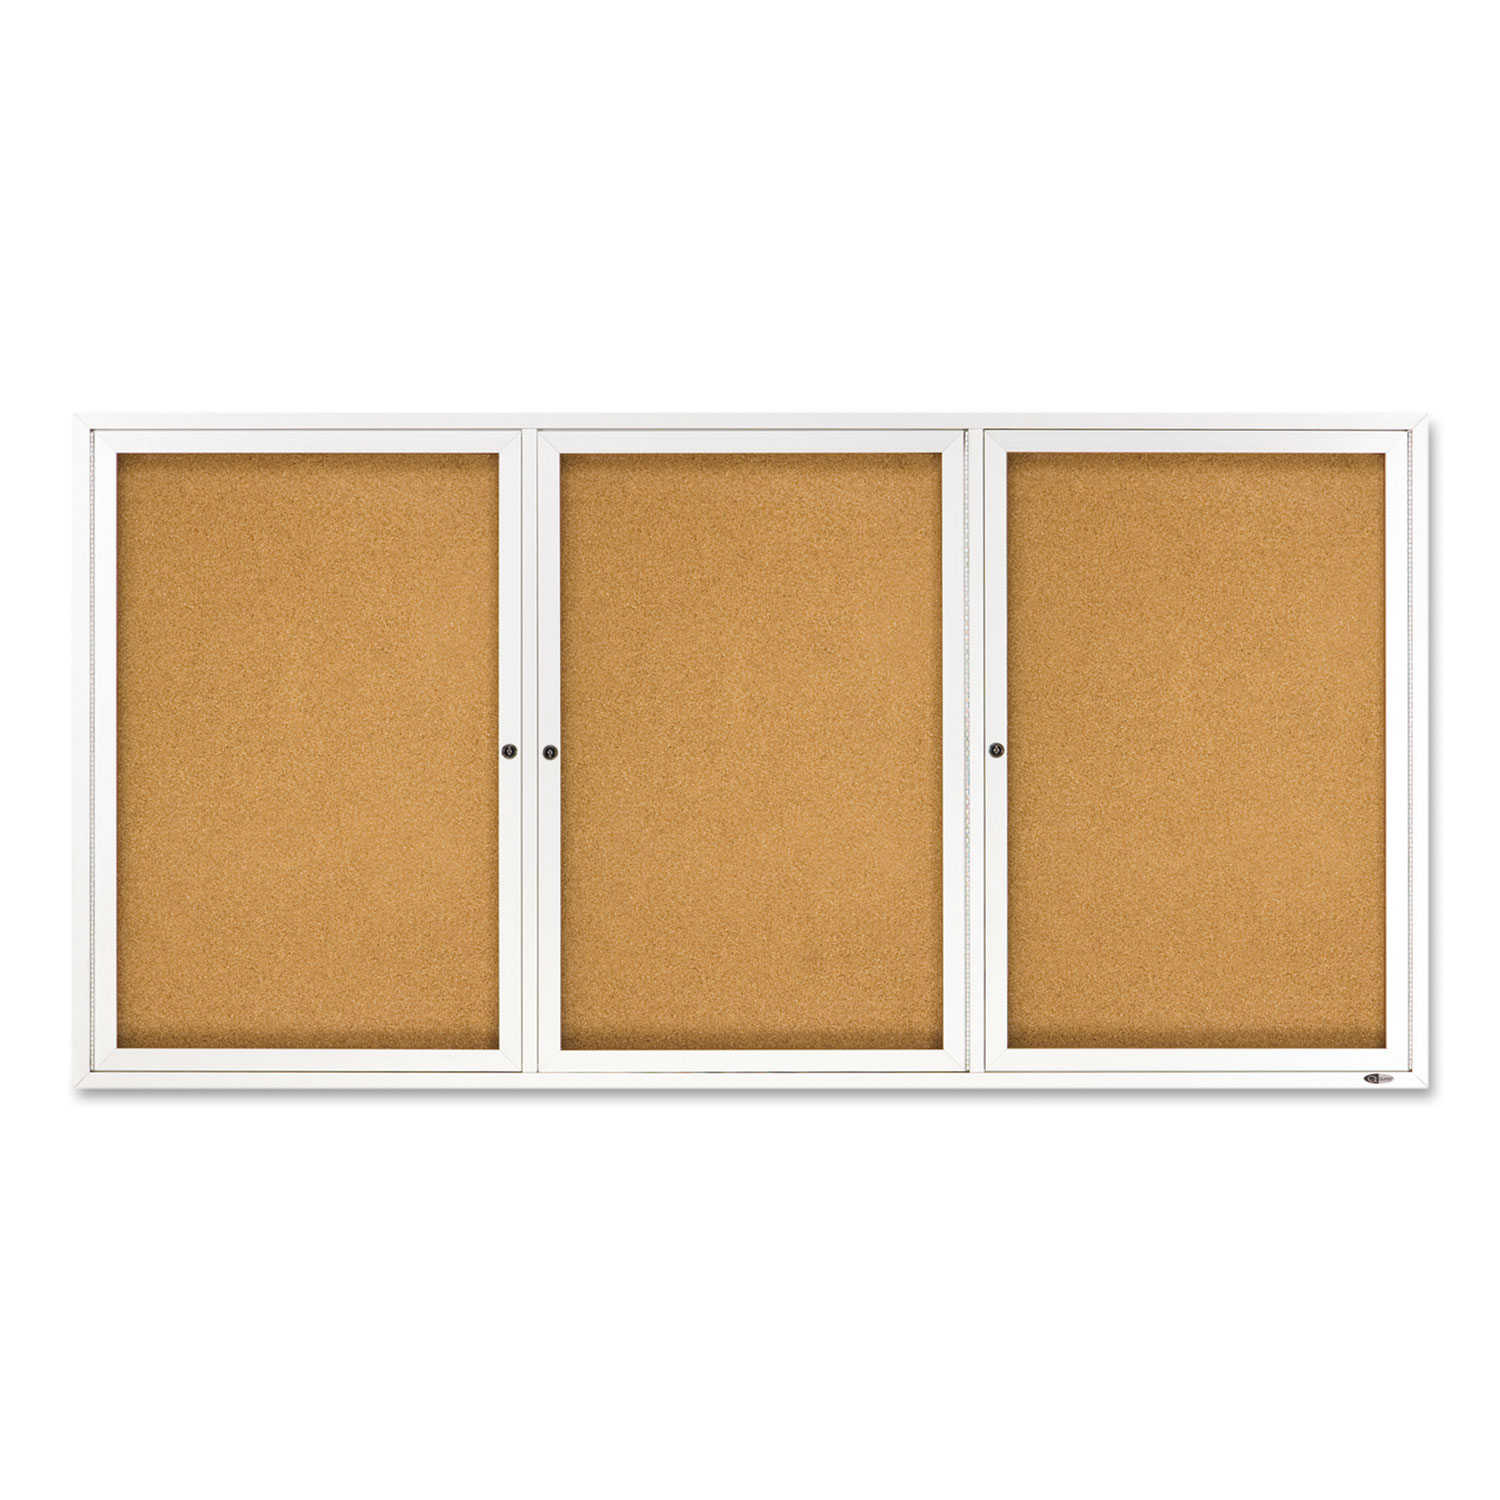  Quartet 2366 Enclosed Bulletin Board, Natural Cork/Fiberboard, 72 x 36, Silver Aluminum Frame (QRT2366) 